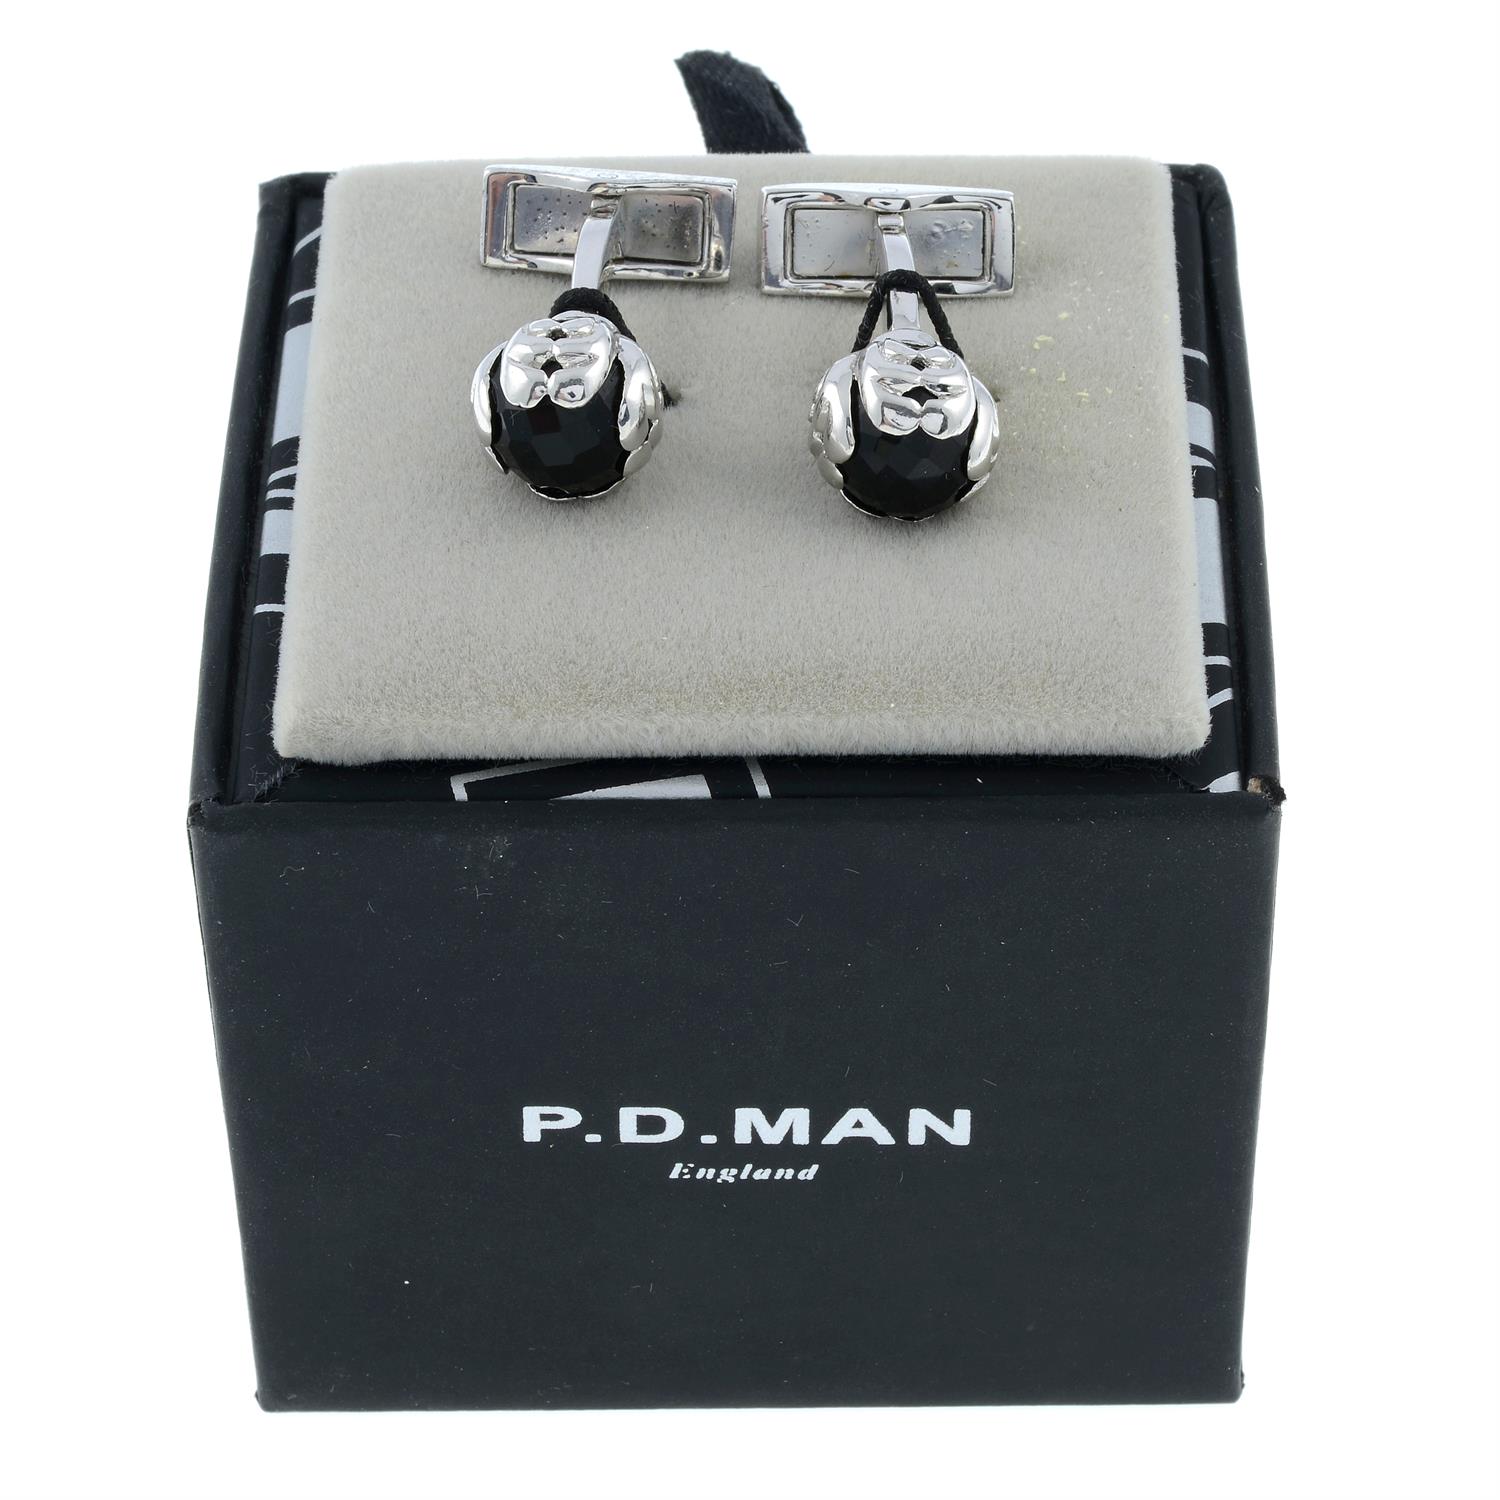 A pair of silver floral cufflinks, each with black gem accent, by P. D. Man. - Bild 3 aus 3